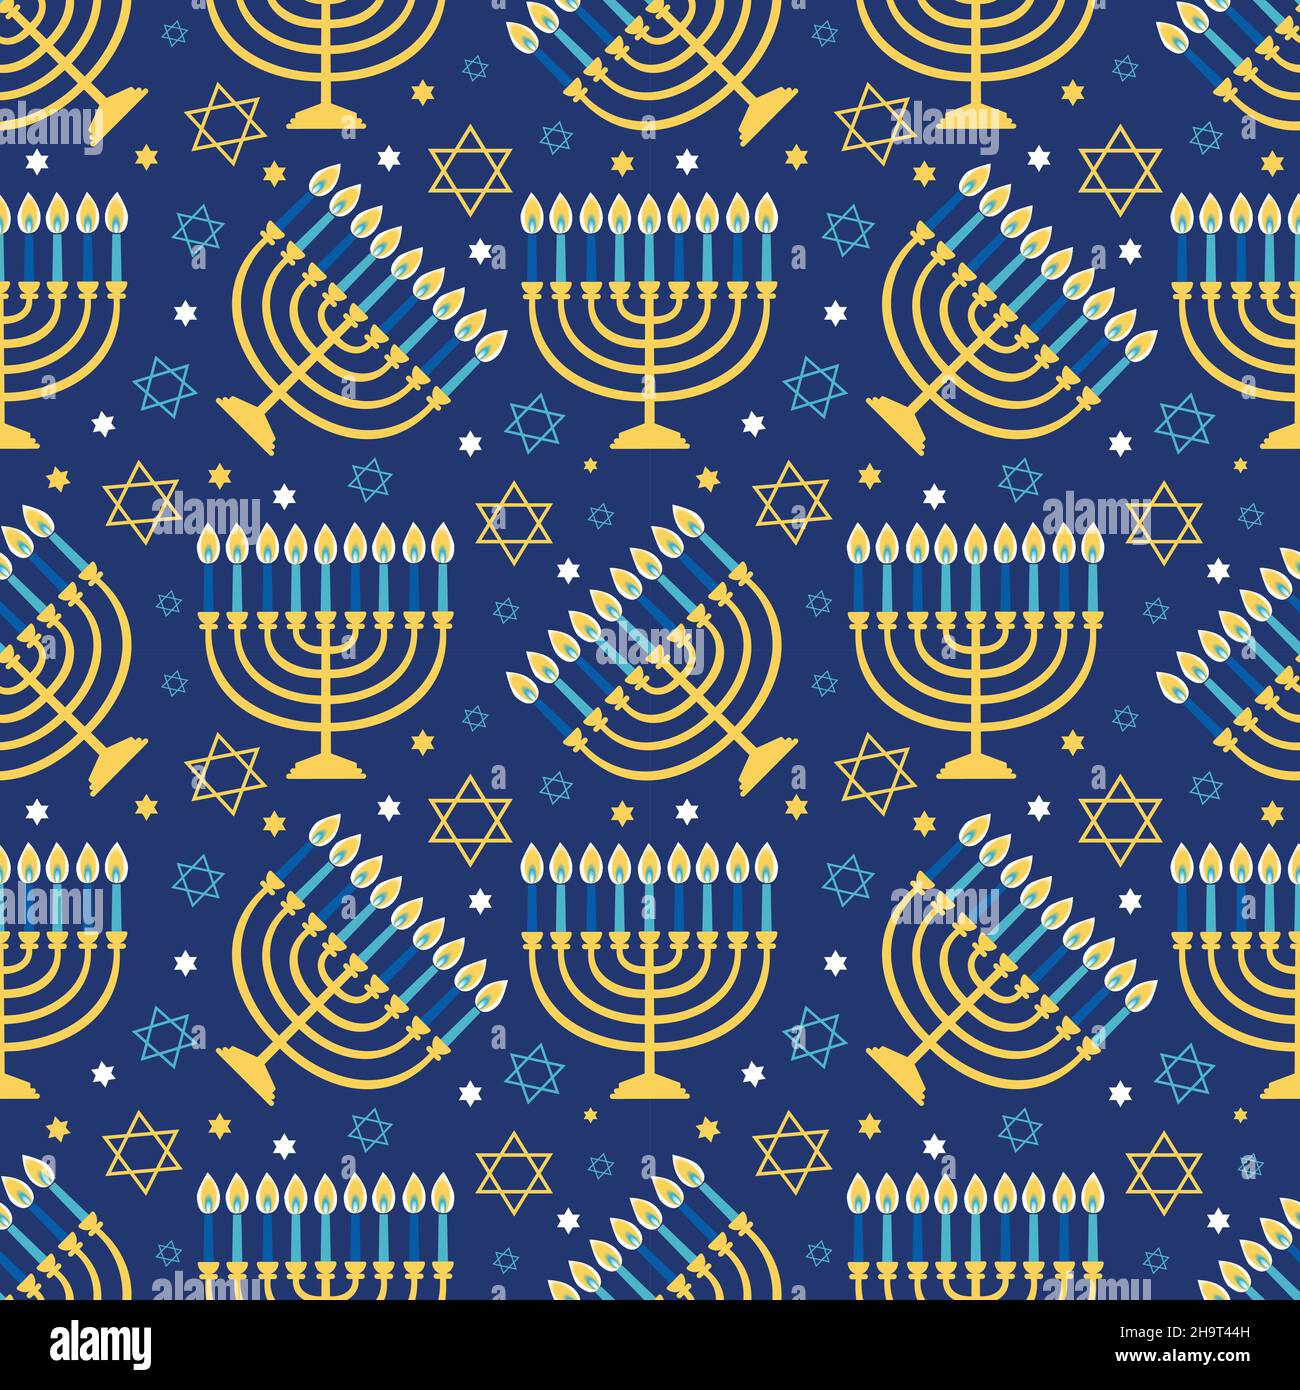 Hanukkah Wallpaper Images - Free Download on Freepik